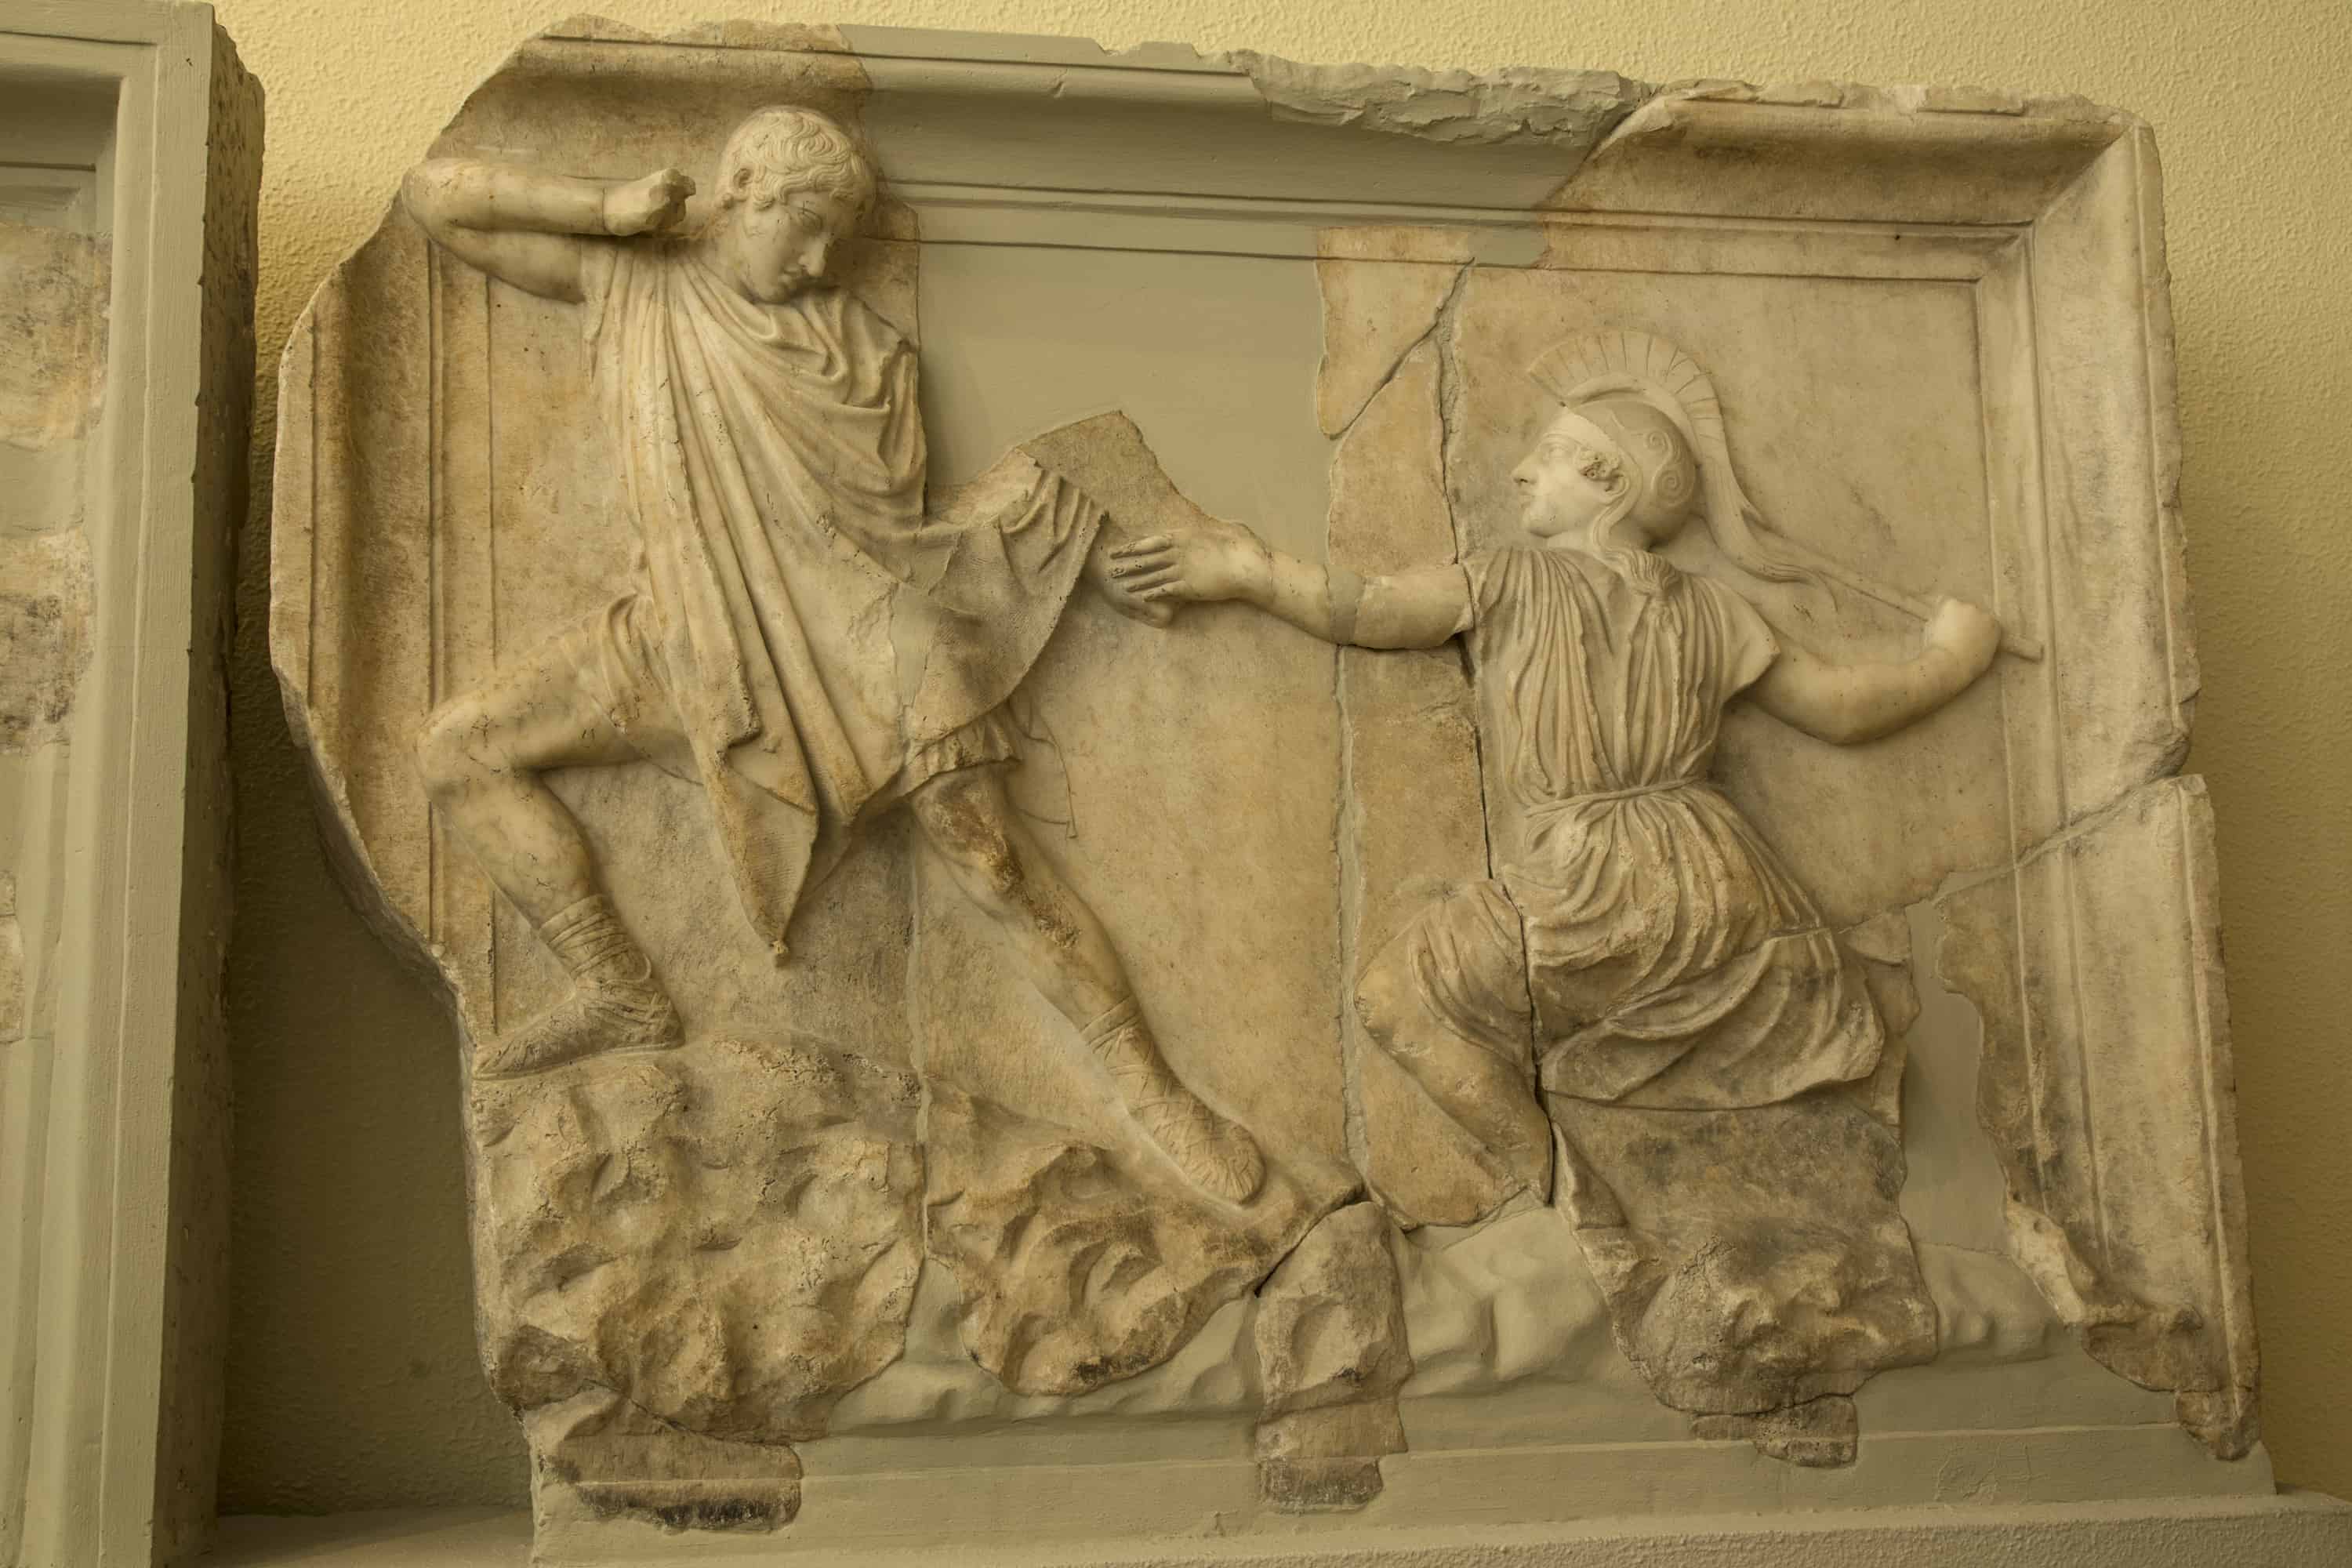 ancient greek olympics pankration